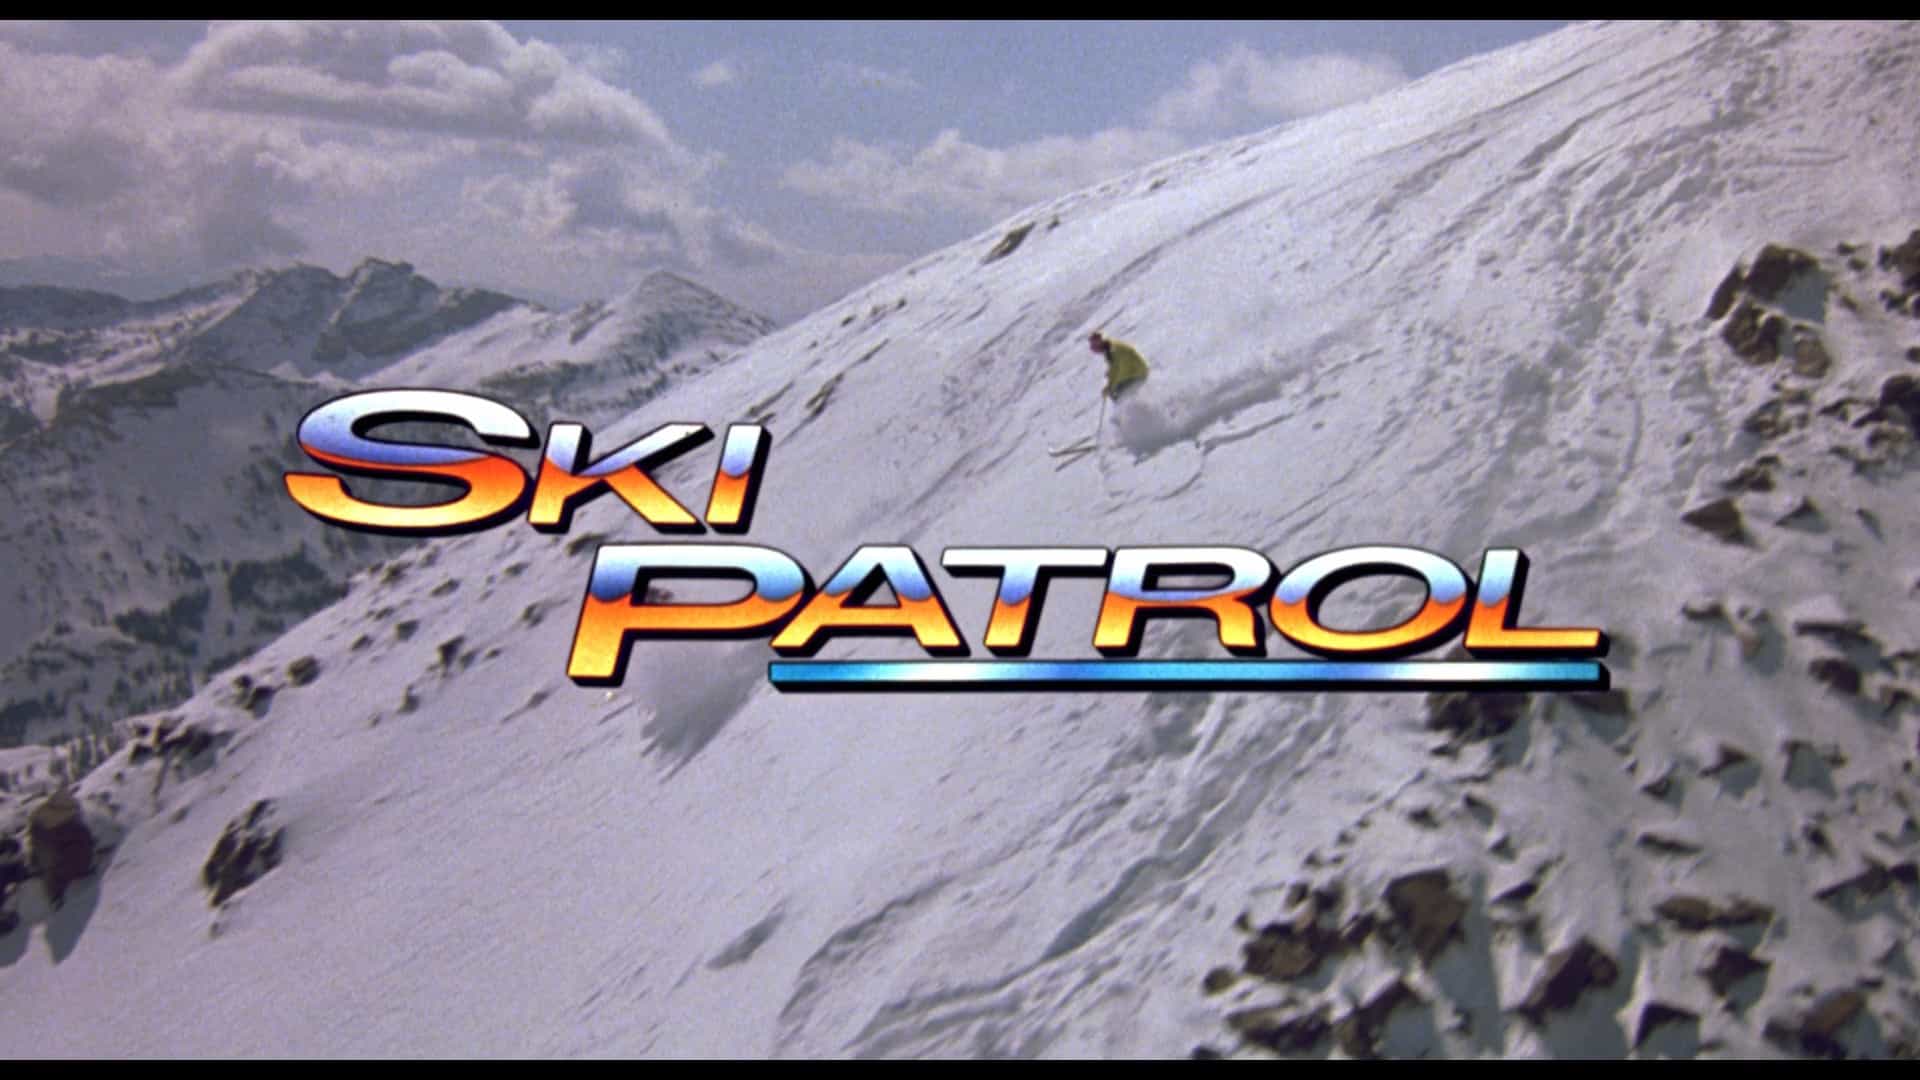 Ski Patrol (1990) [MVD Rewind Collection Blu-ray review] 17